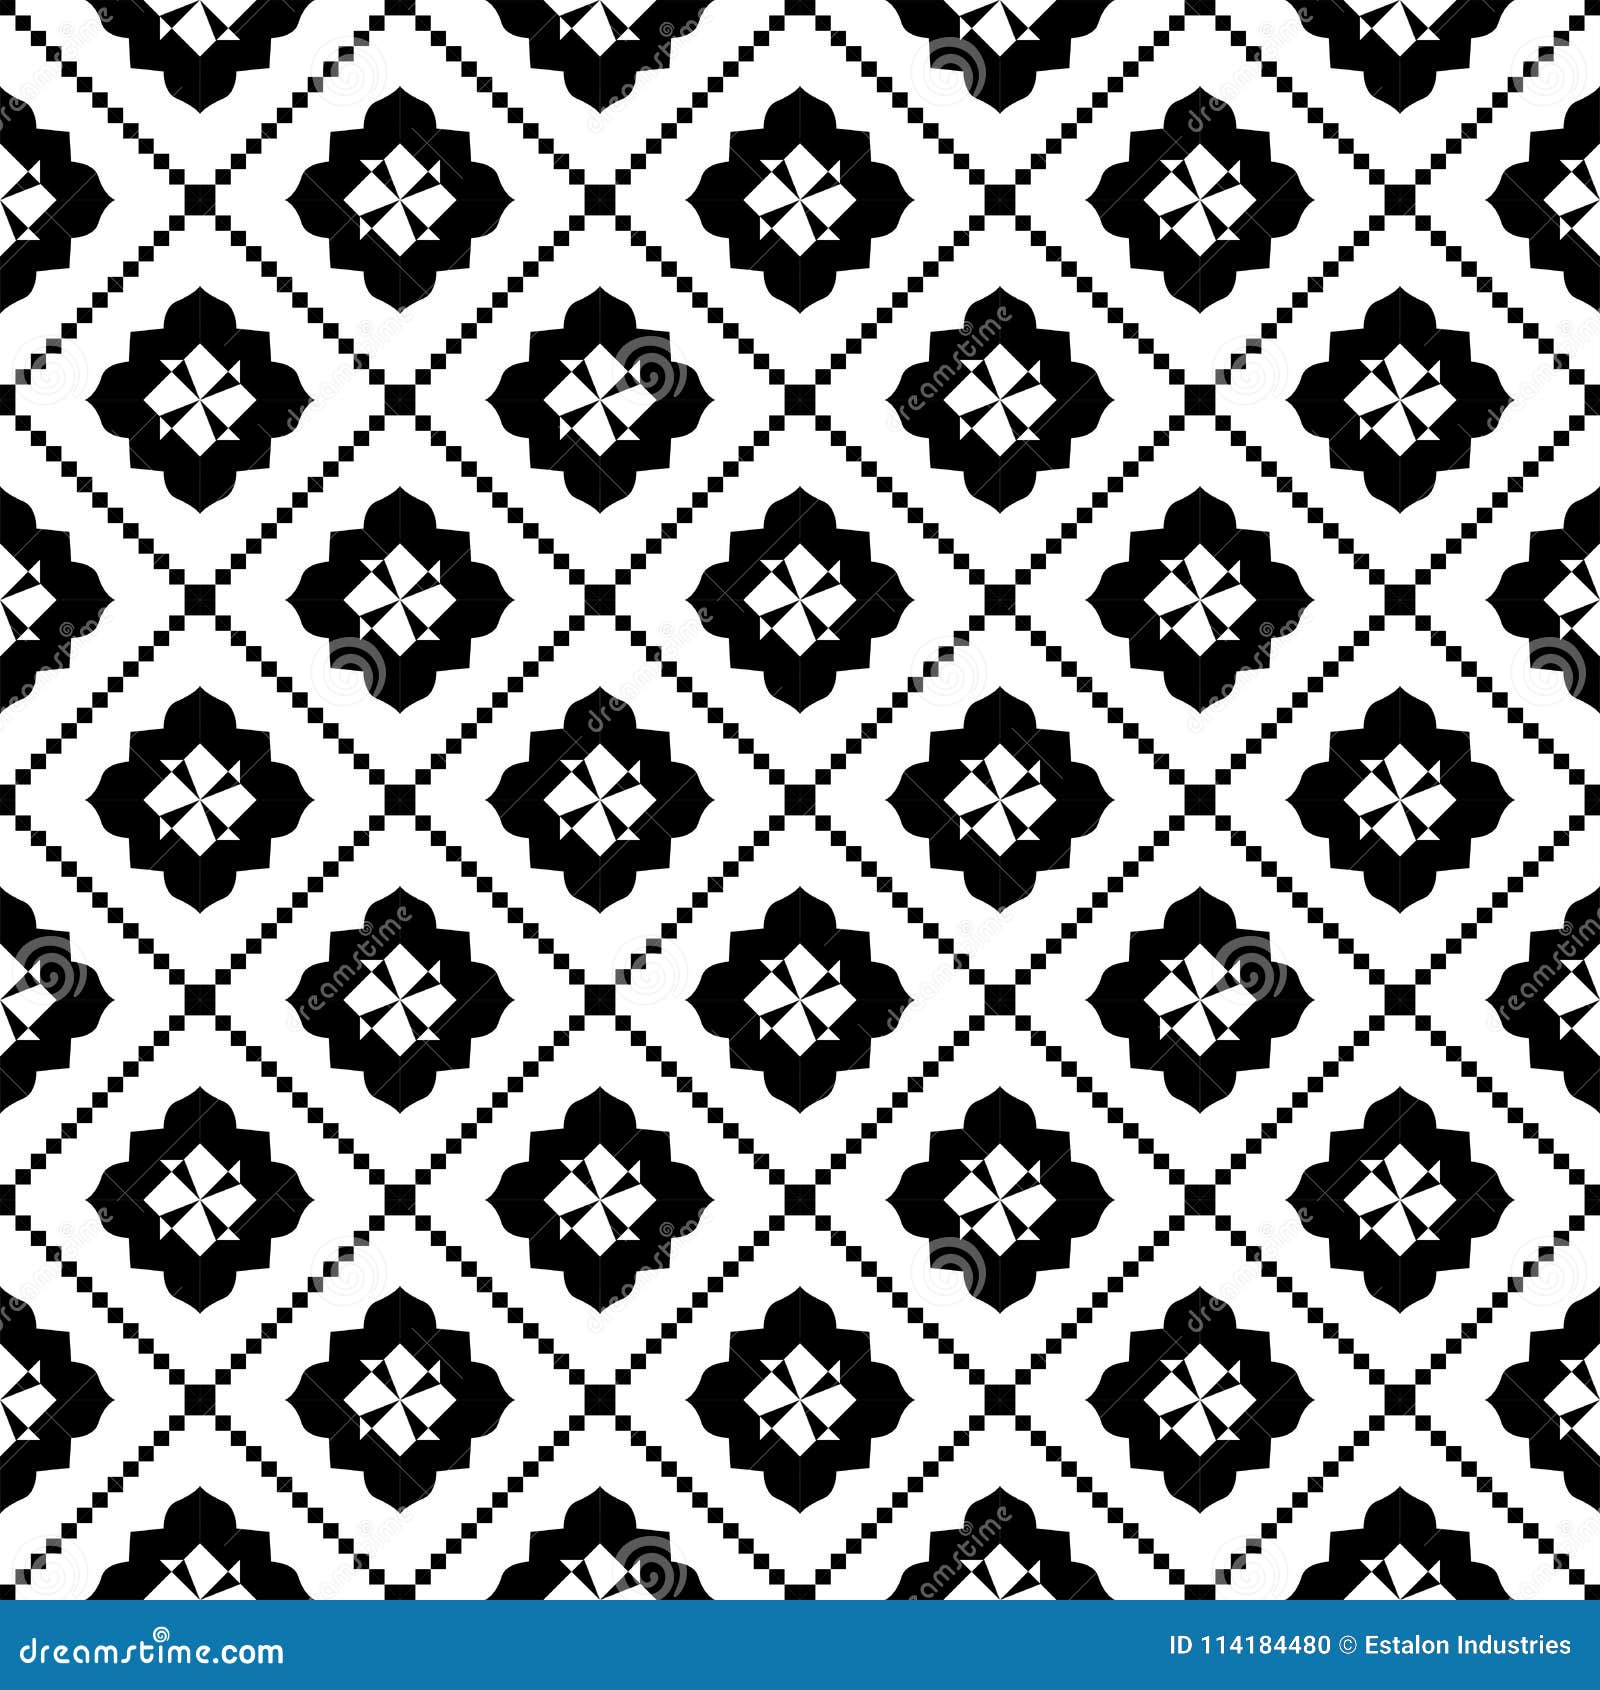 Black On White Geometric Tile With Diamond Line Seamless Repeat